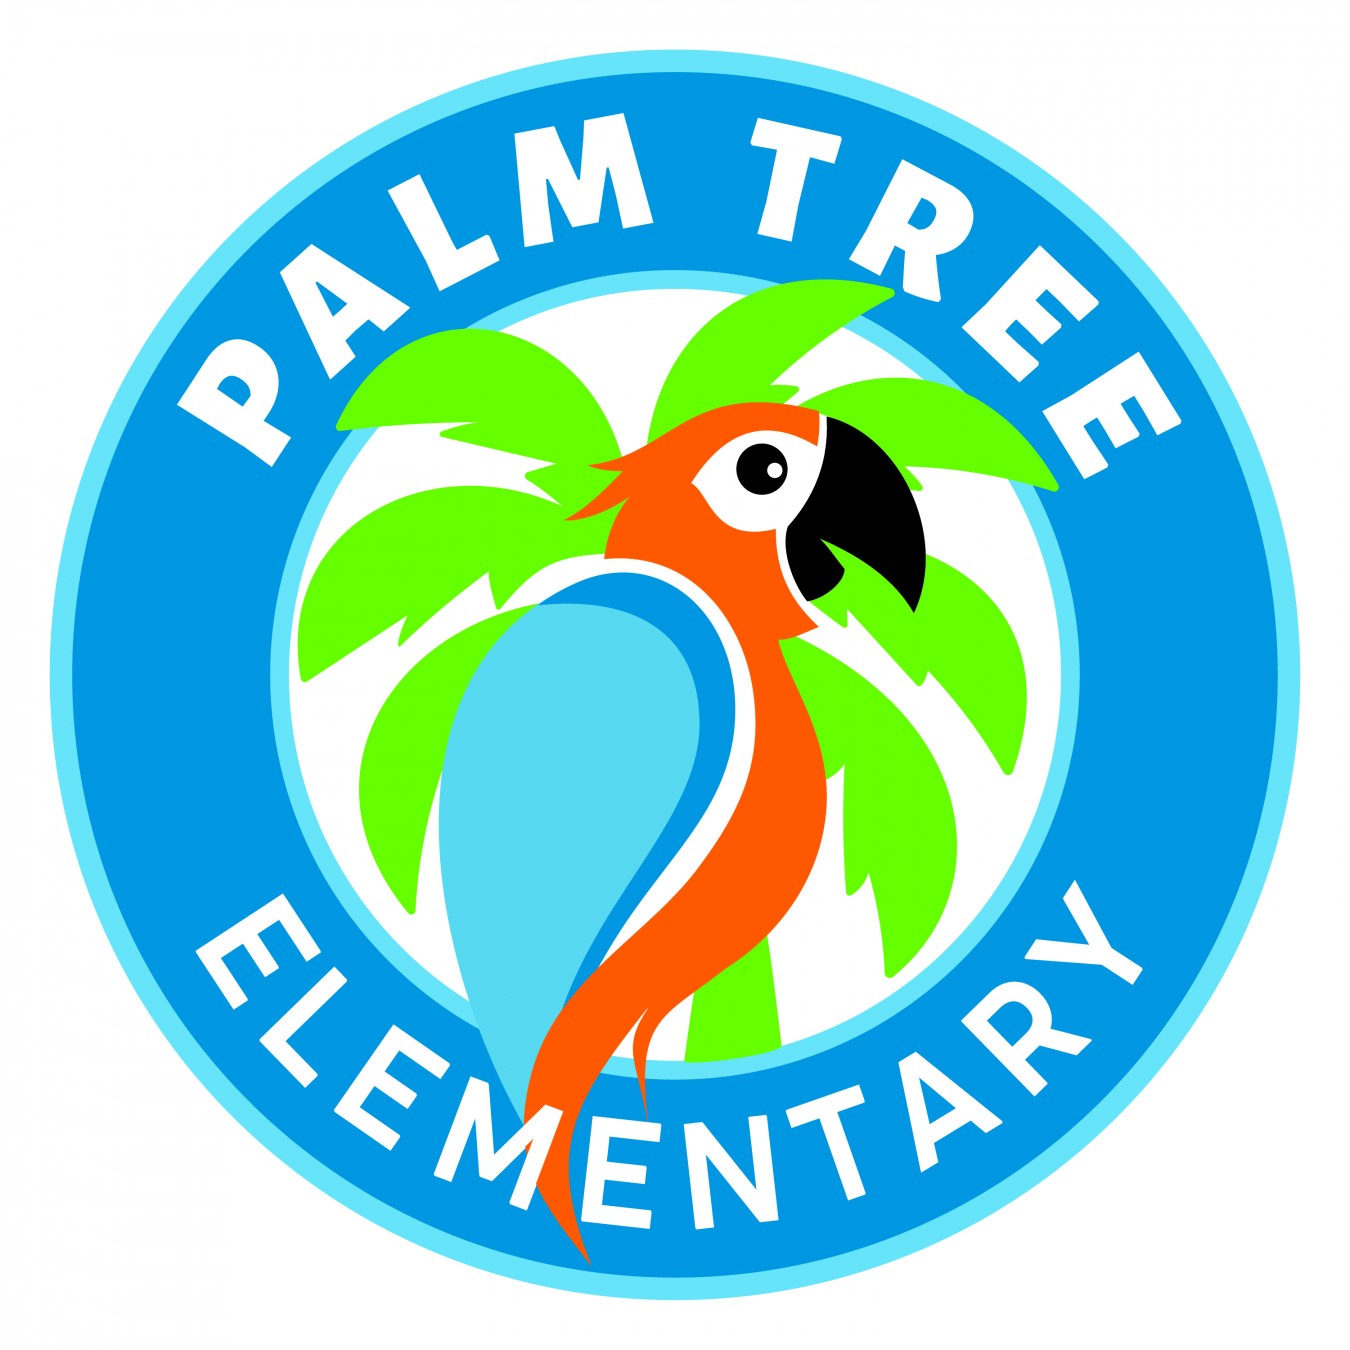 Palm Tree Elementary School